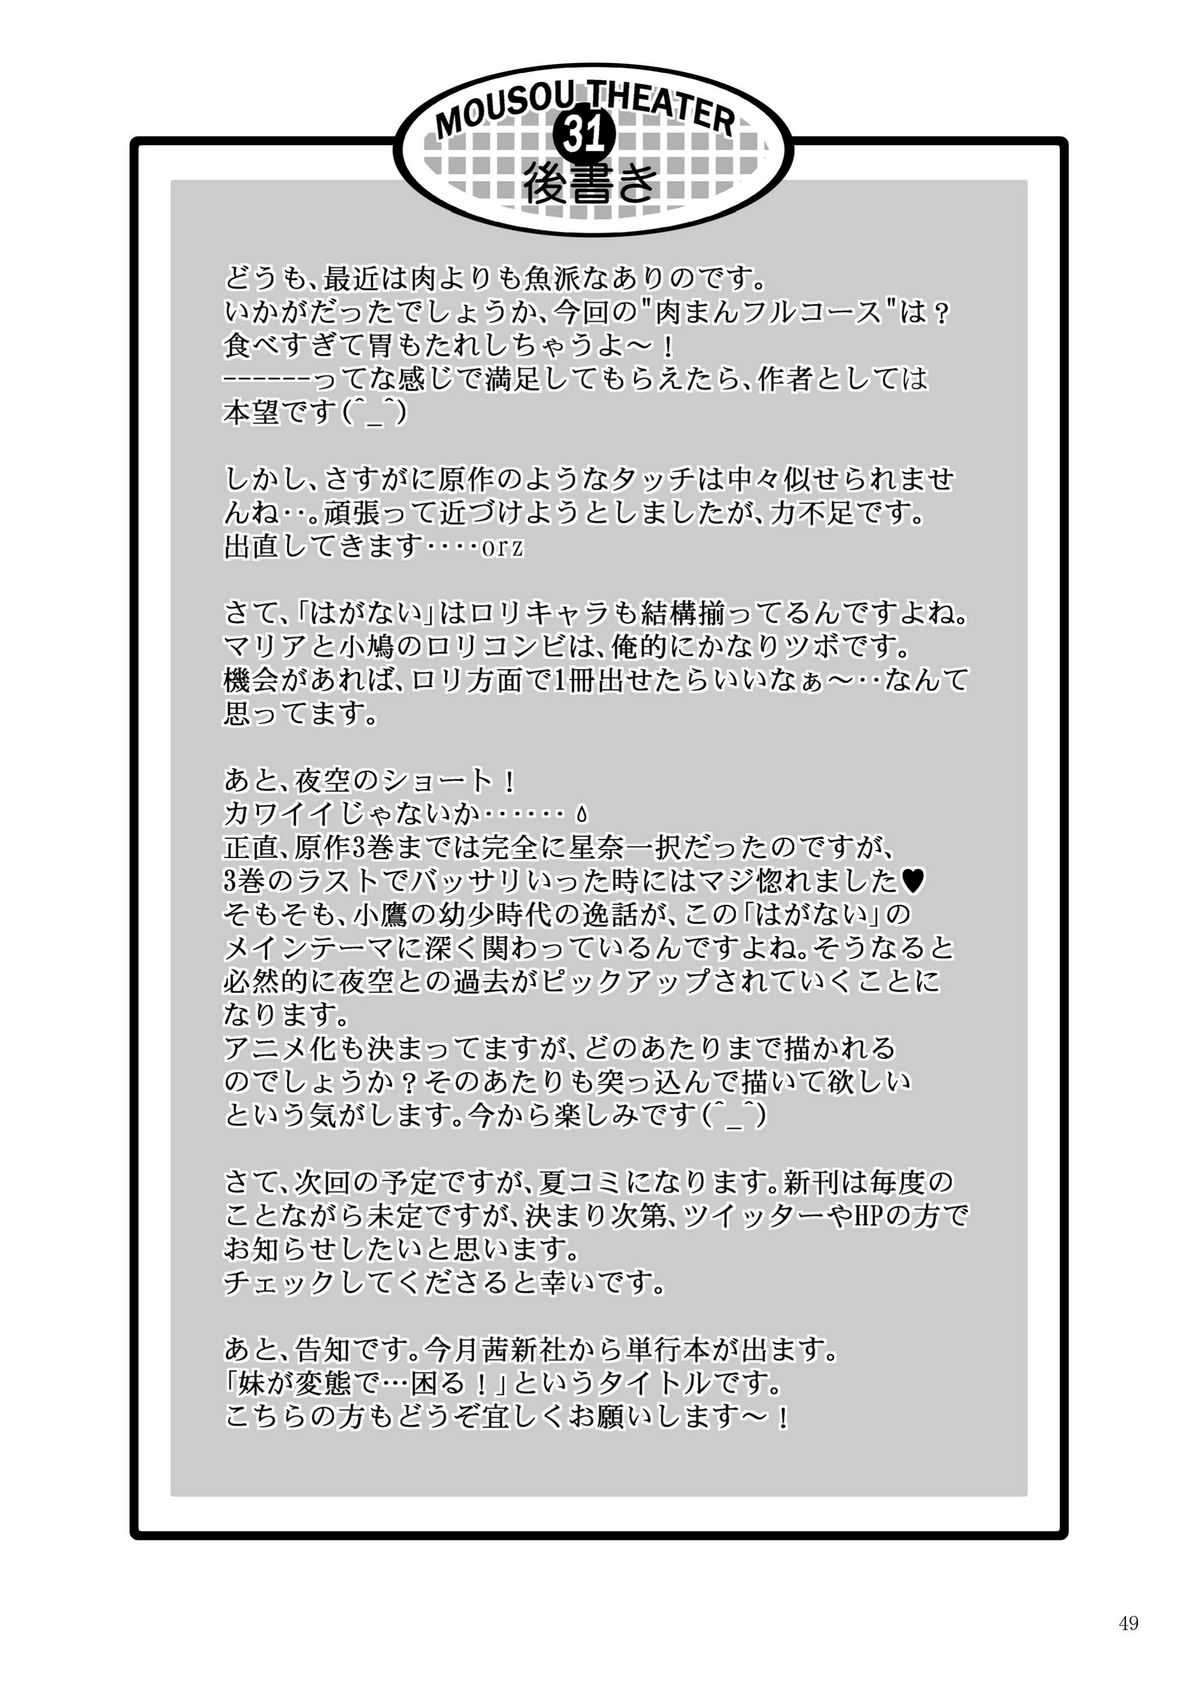 [Studio BIG-X (Arino Hiroshi)] MOUSOU THEATER 31 (Boku wa Tomodachi ga Sukunai) [Digital] [スタジオBIG-X (ありのひろし)] MOUSOU THEATER 31 (僕は友達が少ない) [DL版]